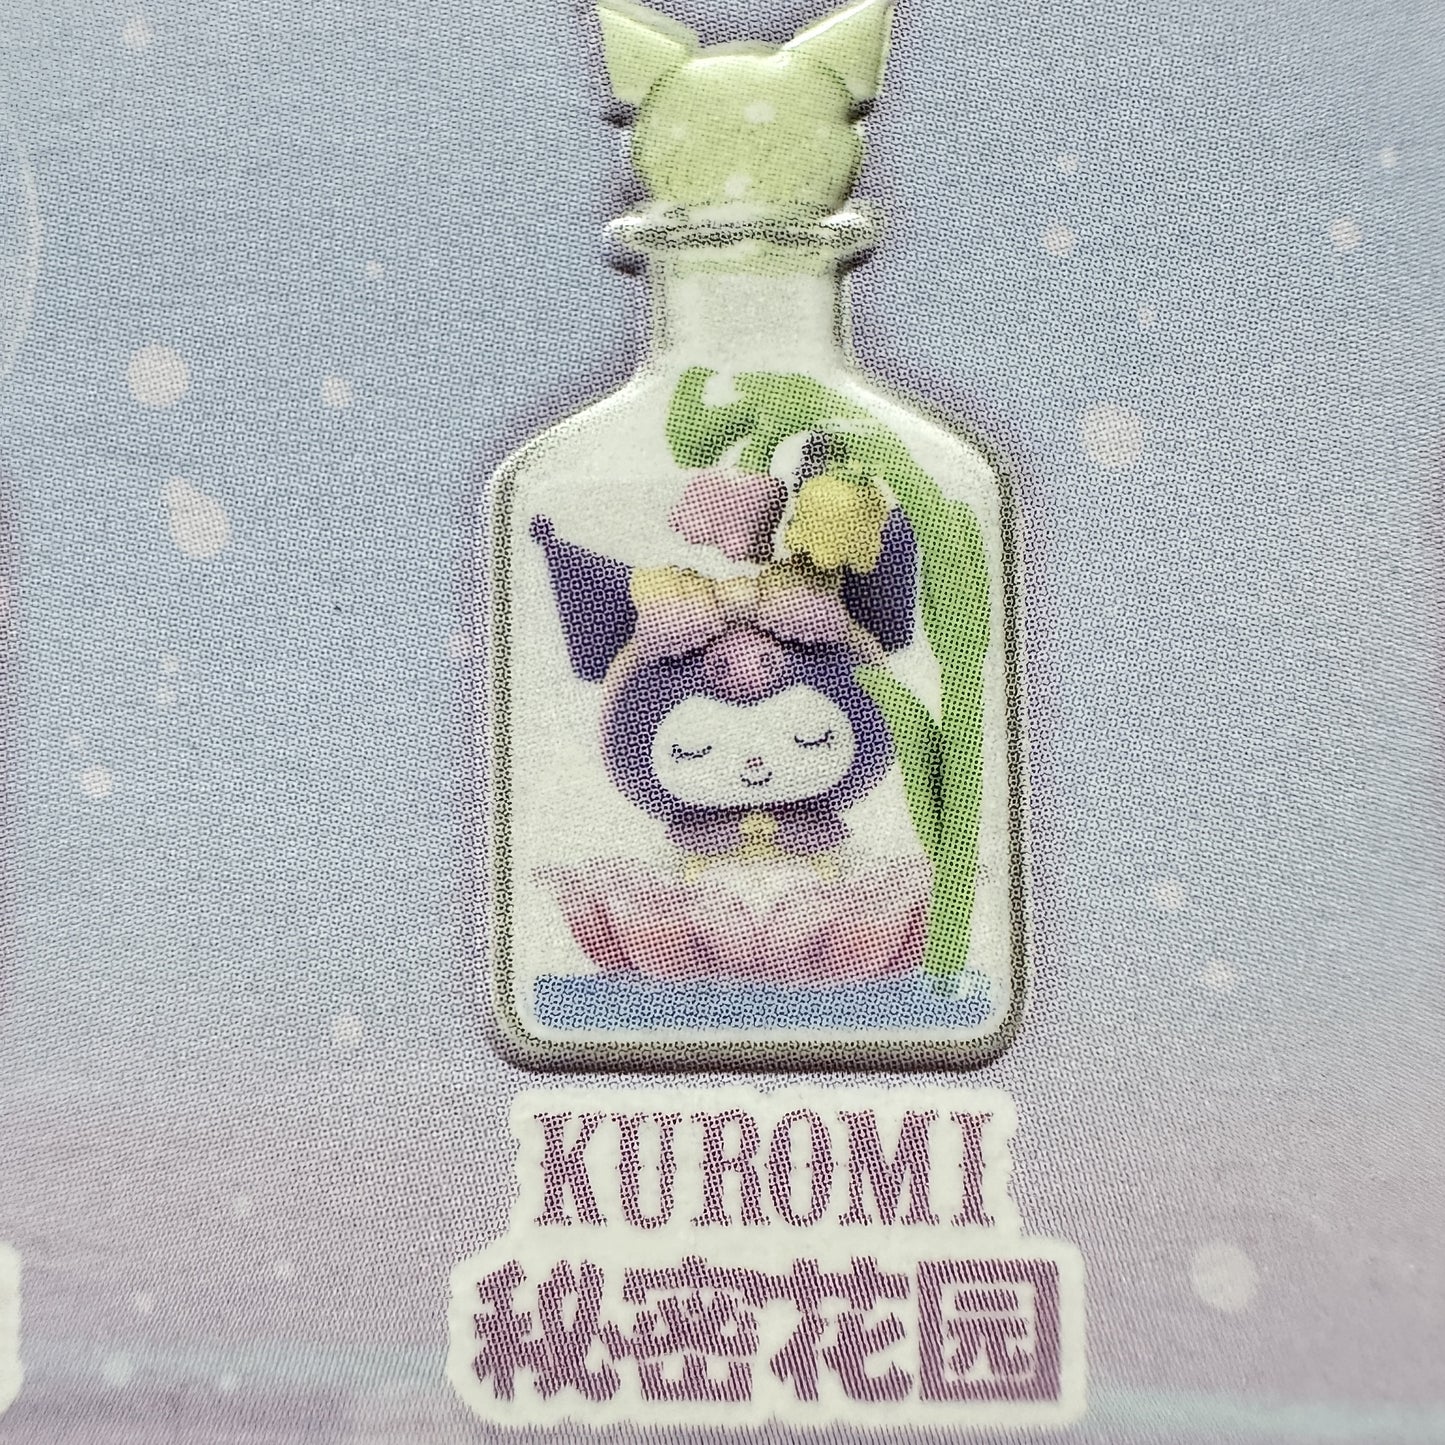 Kuromi Day Dreamer Series PVC Figures